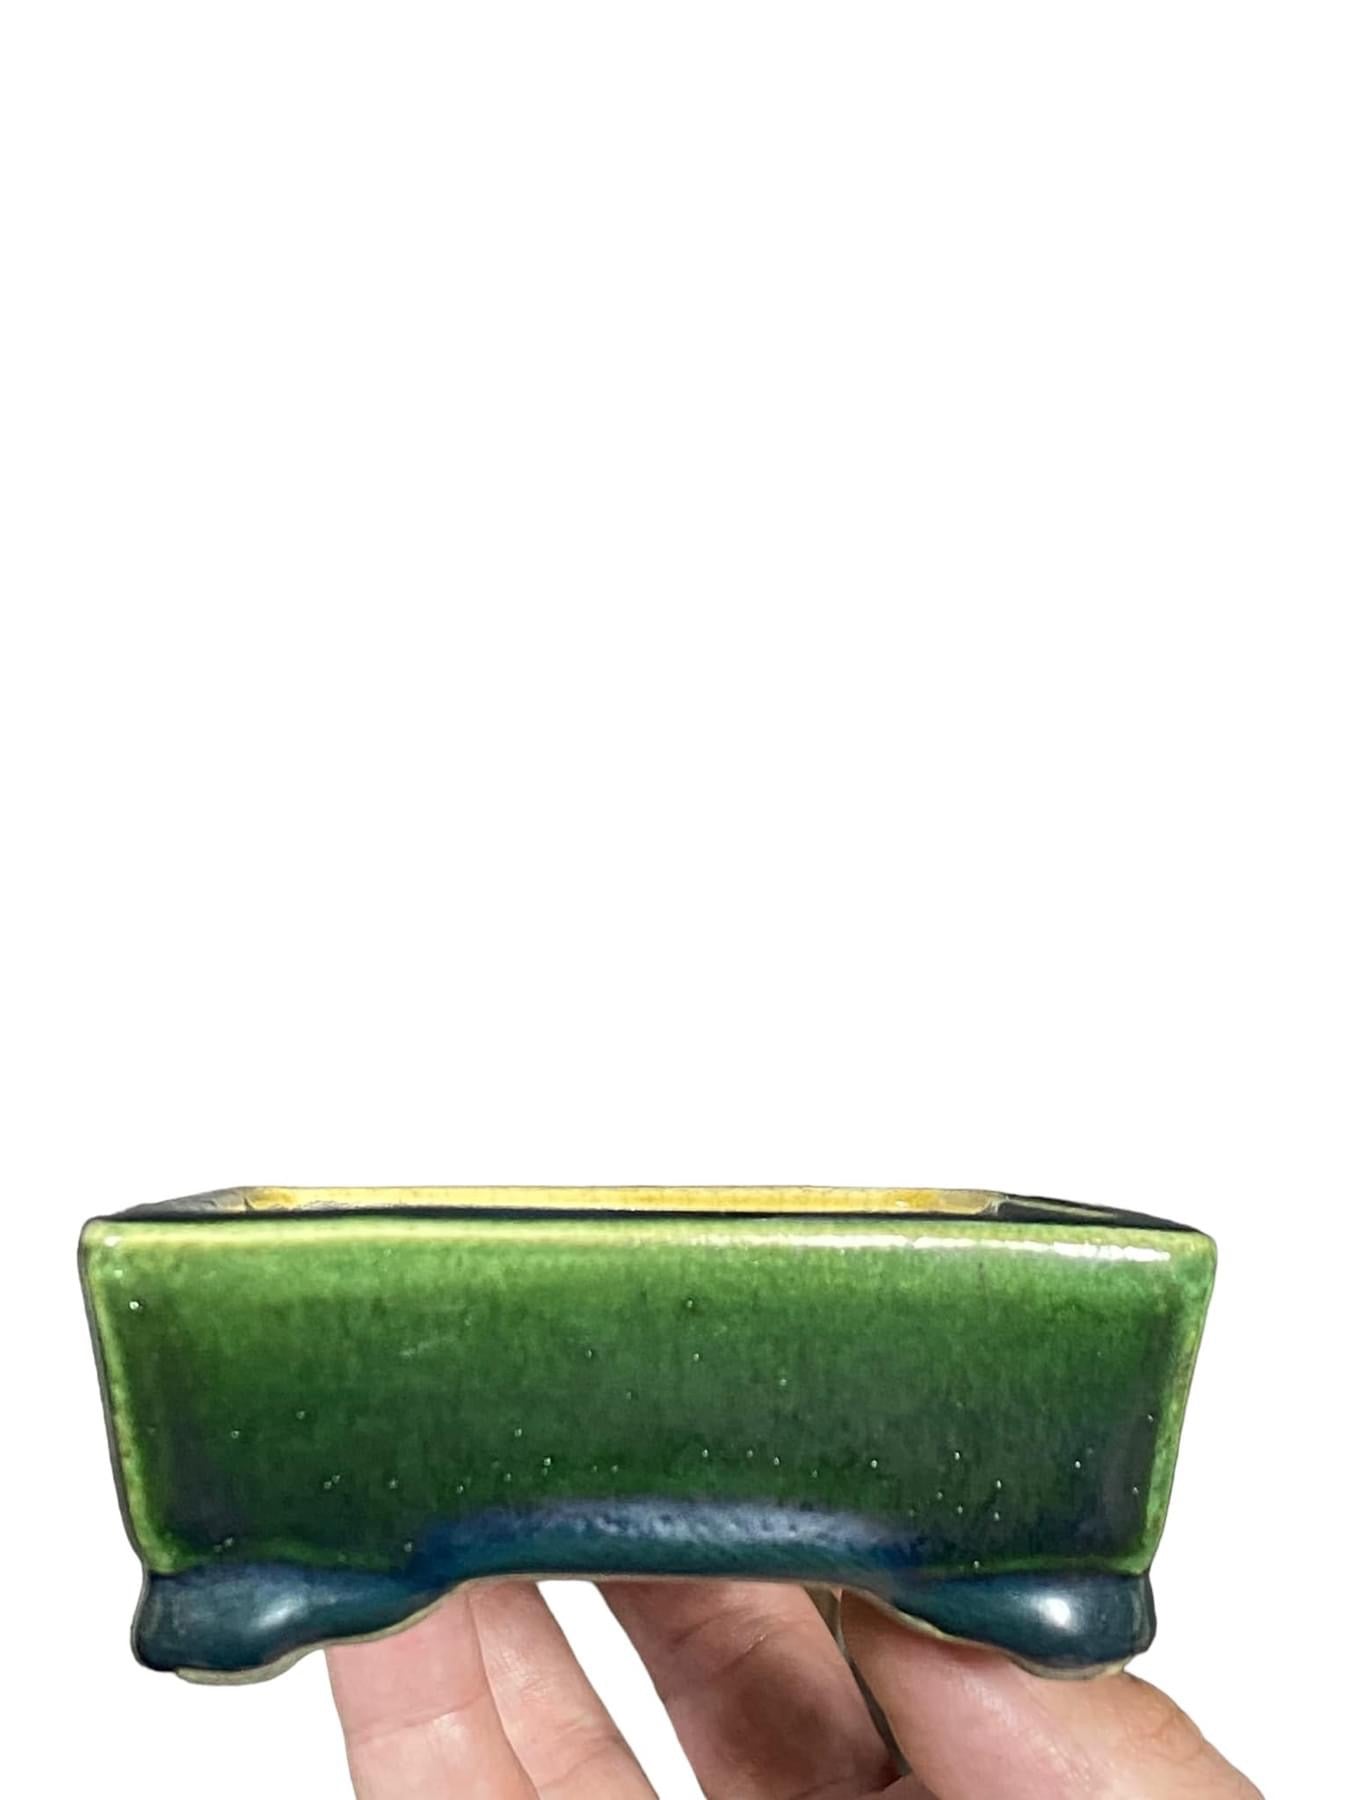 Satomi Terahata - Exhibition Quality Rectangle Bonsai Pot (5-7/8” wide)